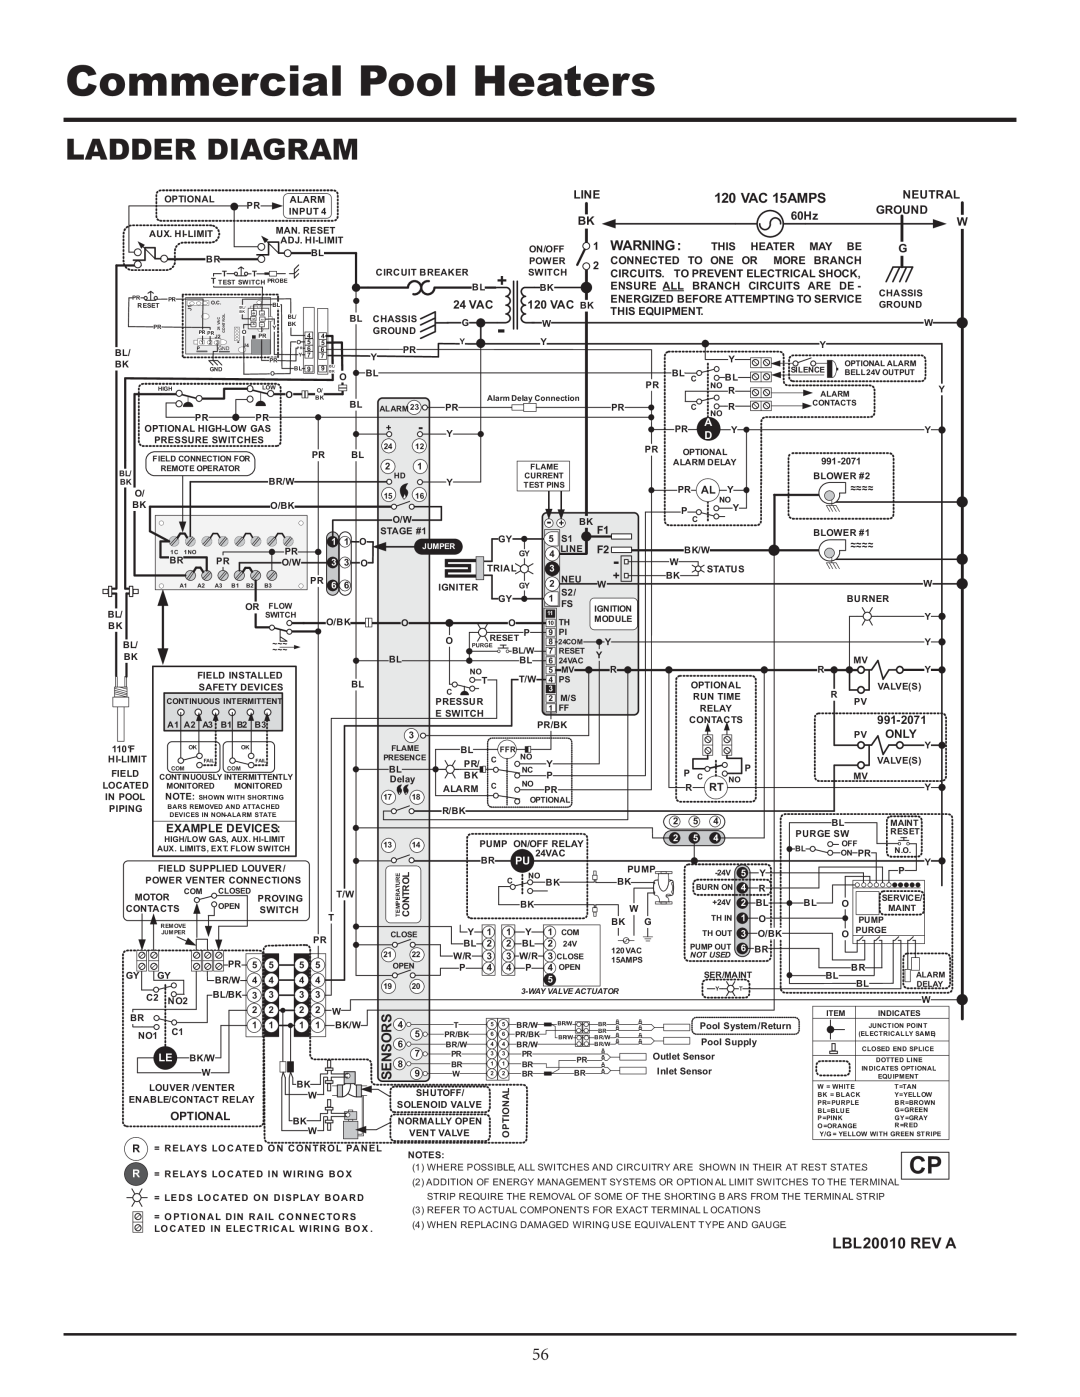 Lochinvar F0600187510 Ladder Diagram, Commercial Pool Heaters, LBL20010 REV A, Sensors, Line, VAC 15AMPS, Neutral, 60Hz 